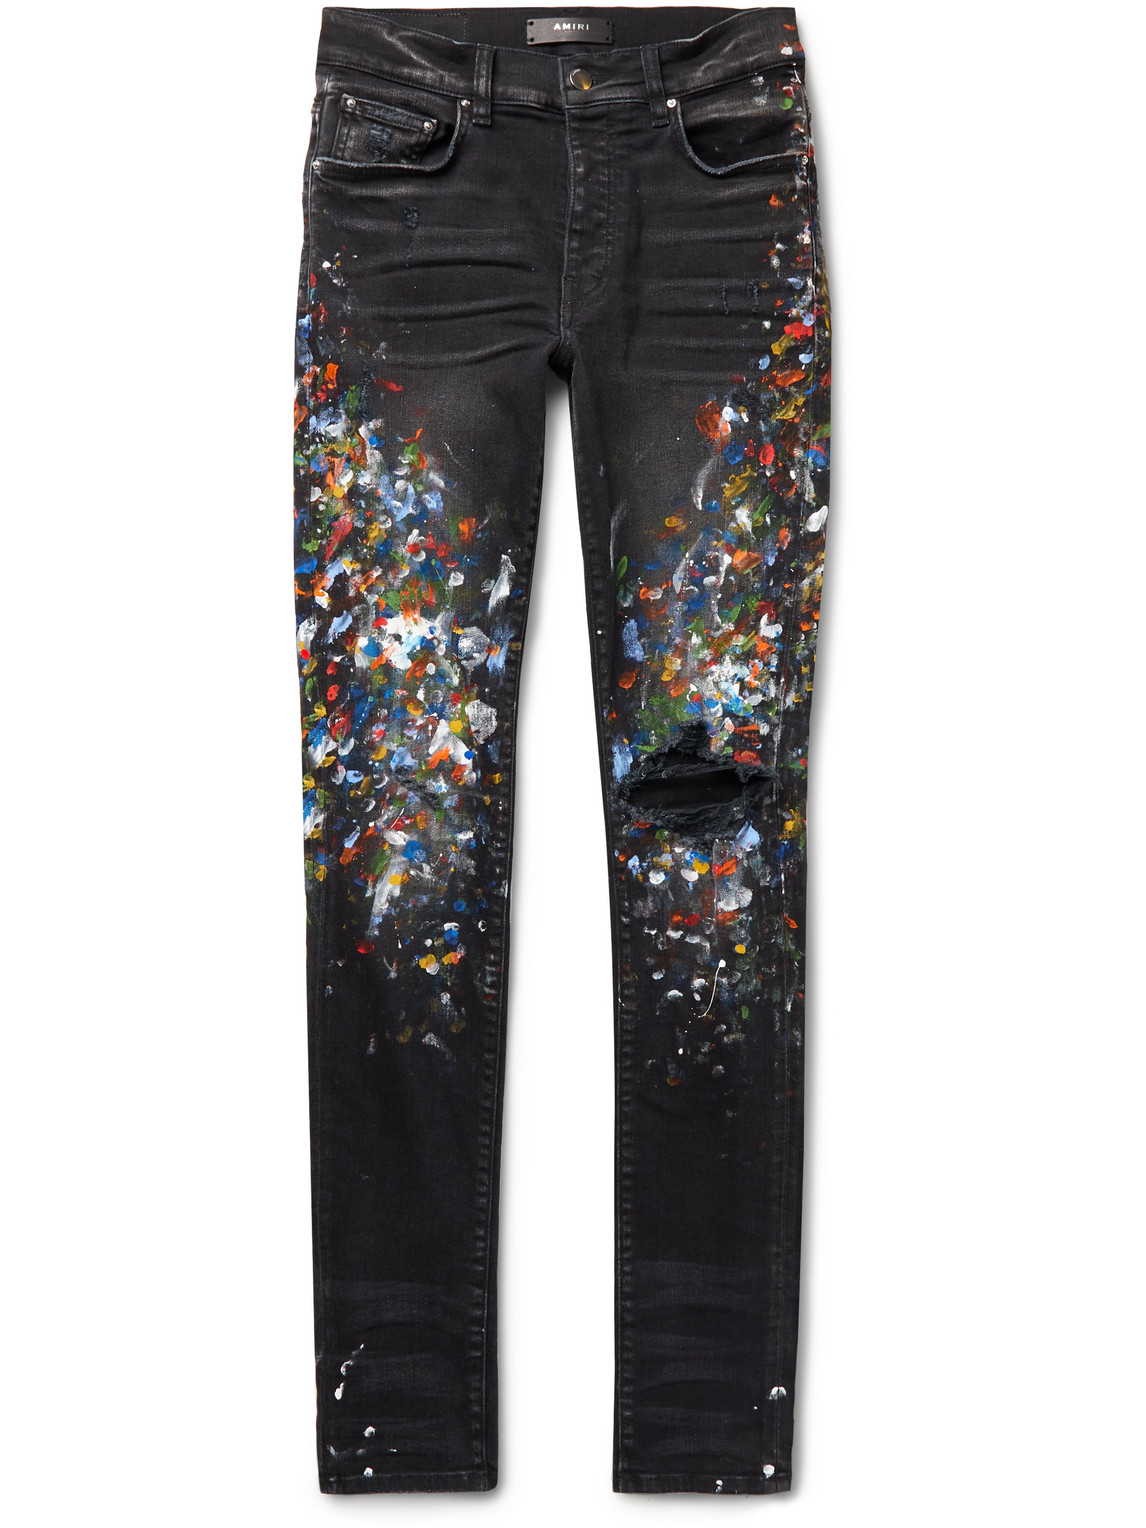 Skinny-Fit Distressed Paint-Splattered Jeans